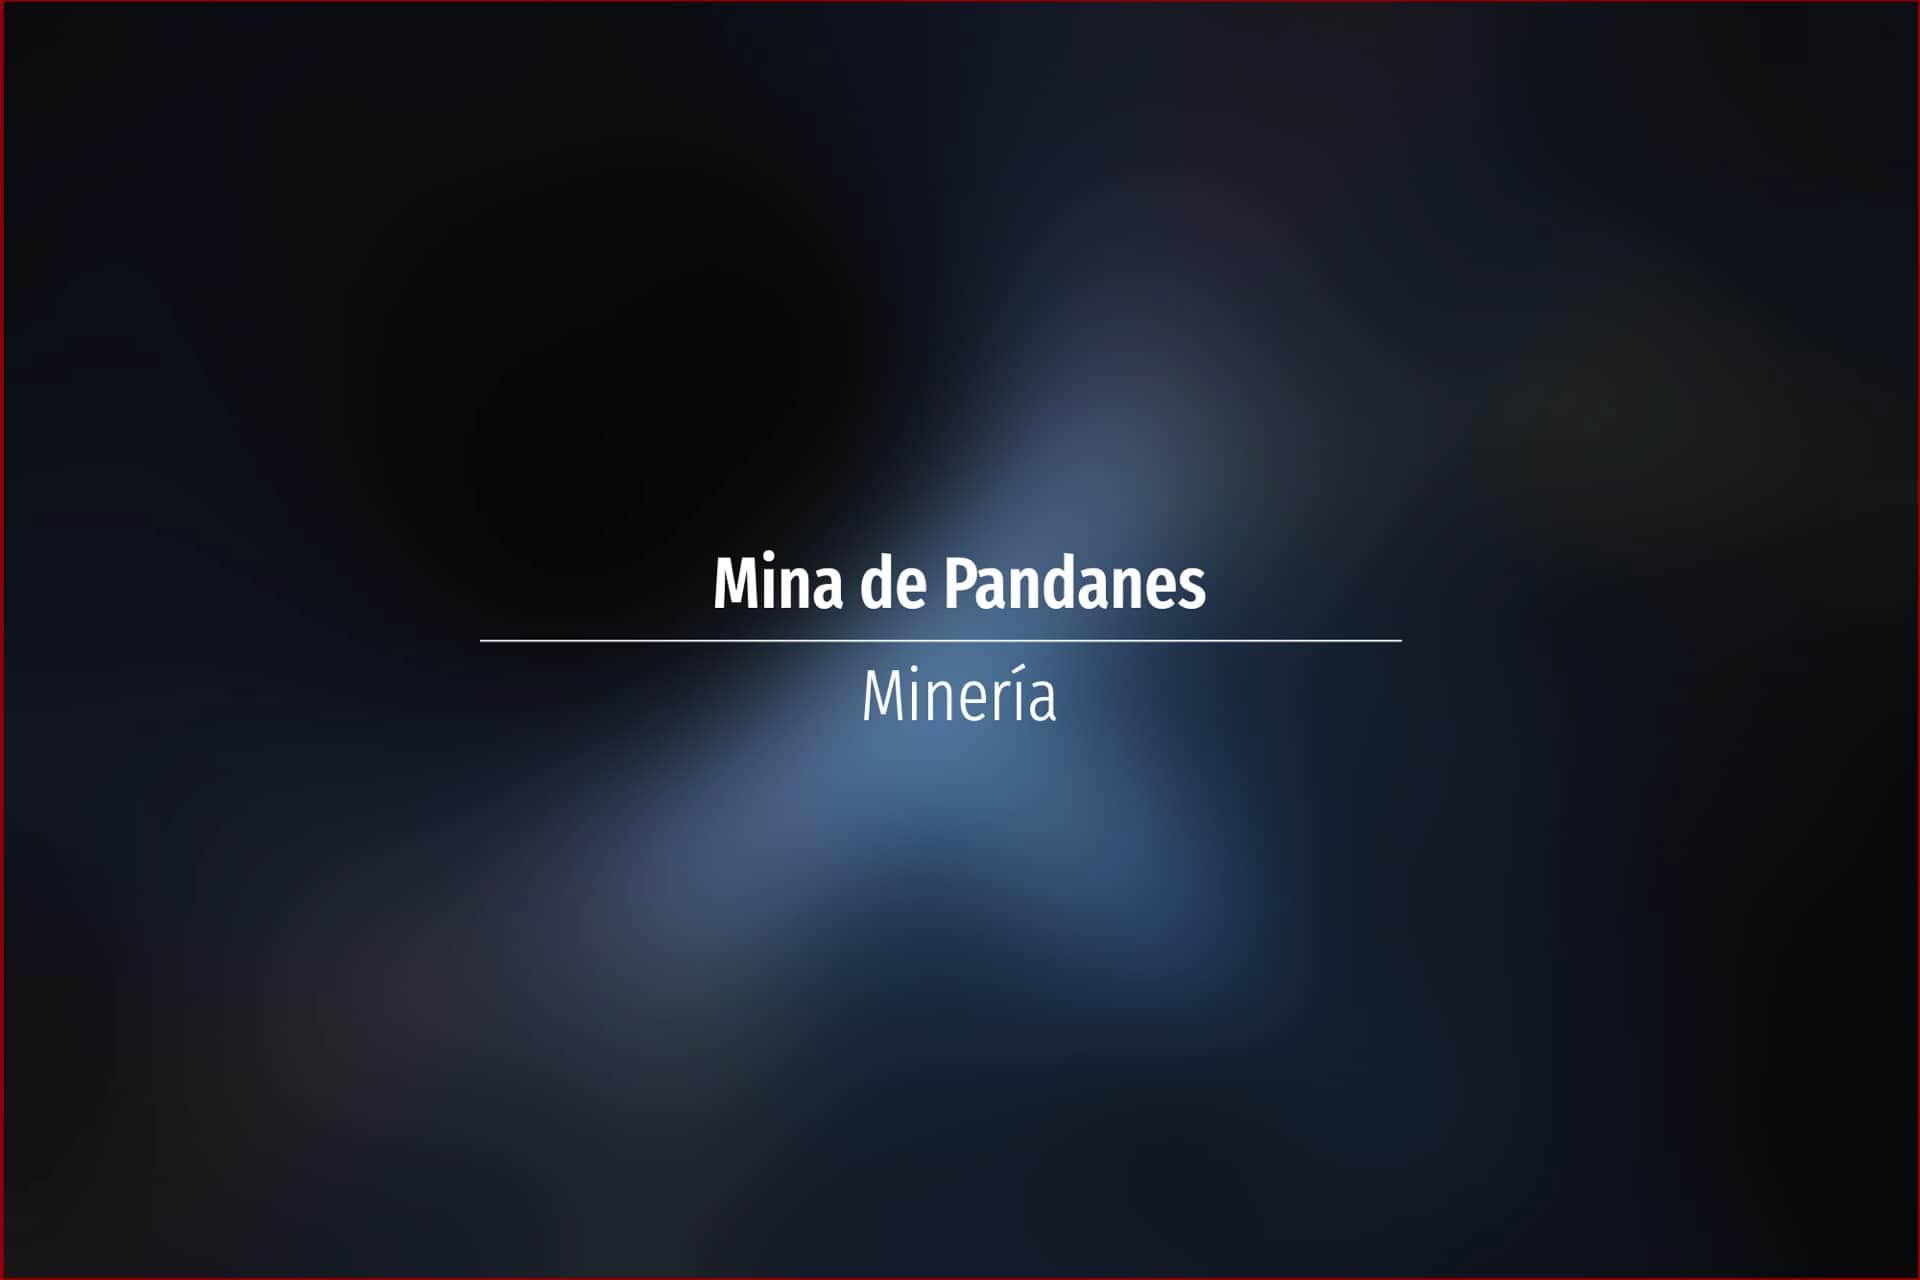 Mina de Pandanes